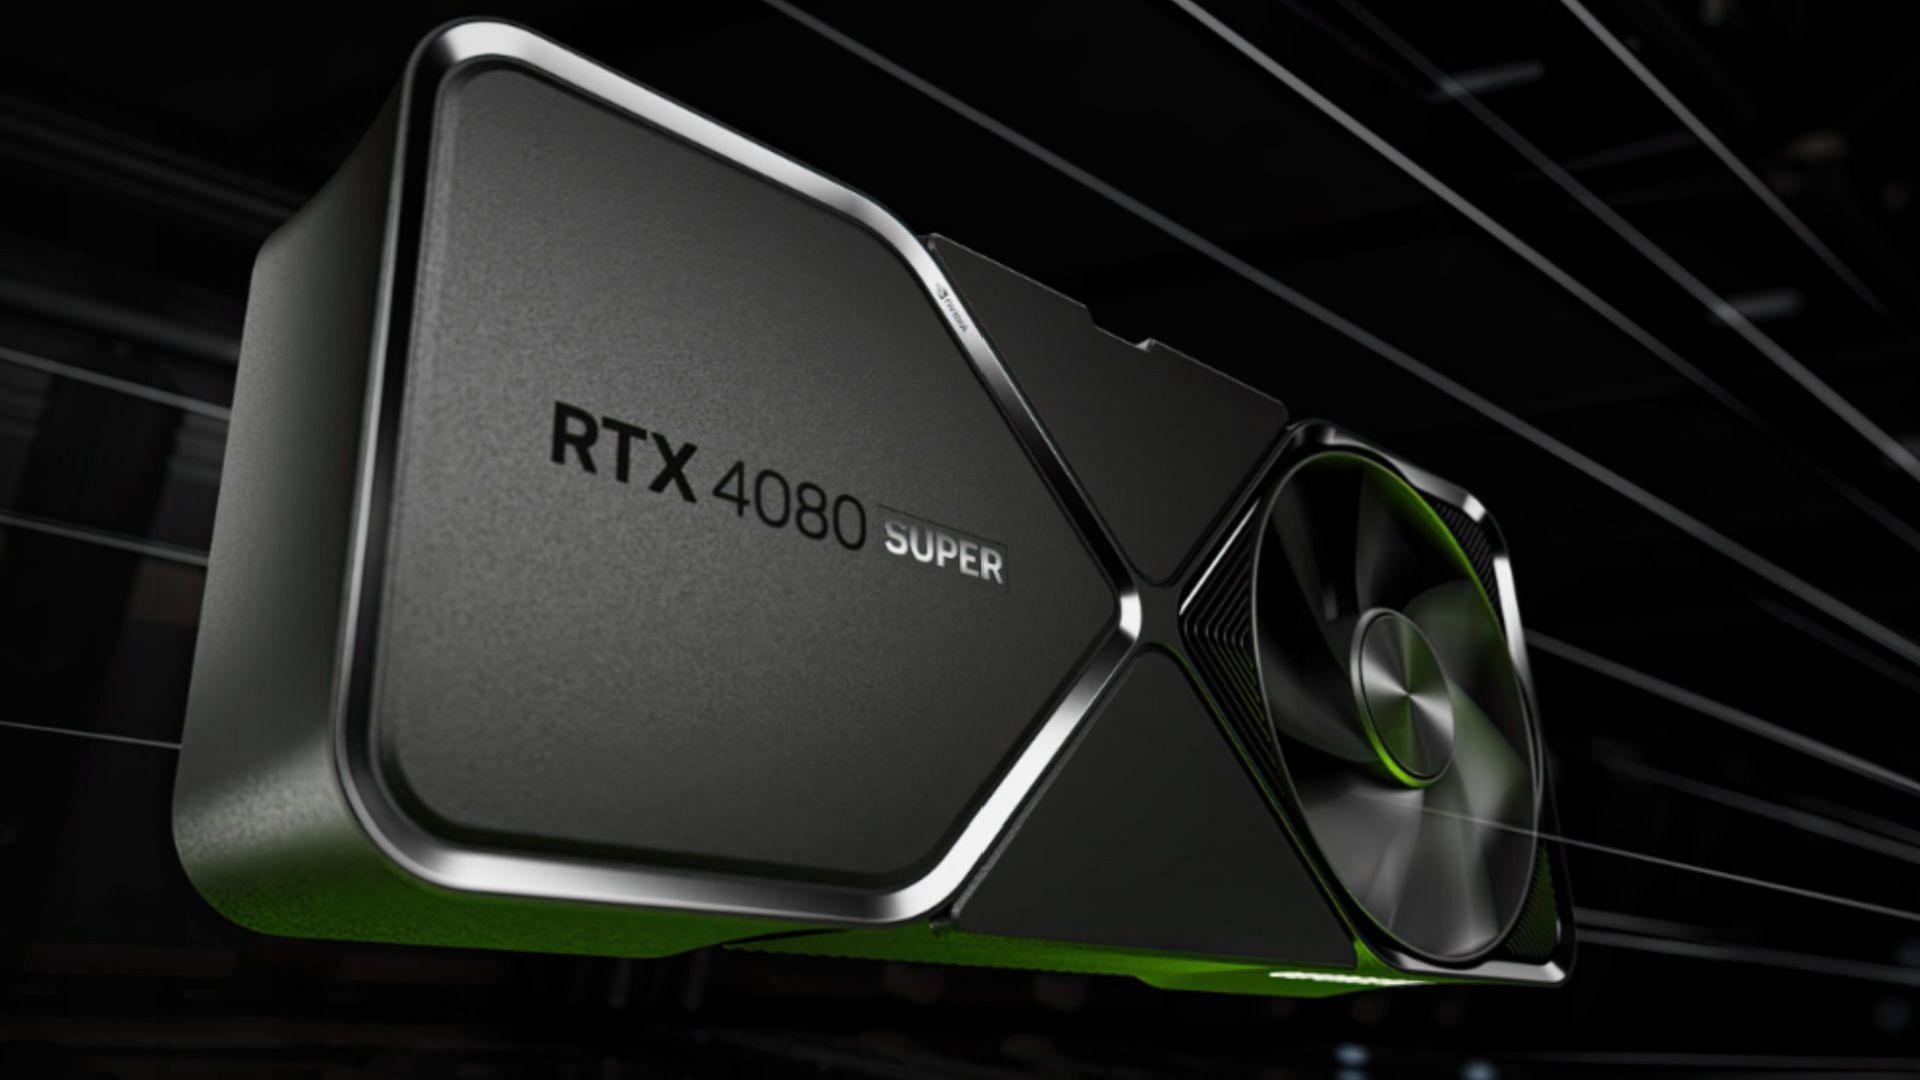 The RTX 4080 Super is a new 4K gaming GPU from Nvidia (Image via Nvidia)